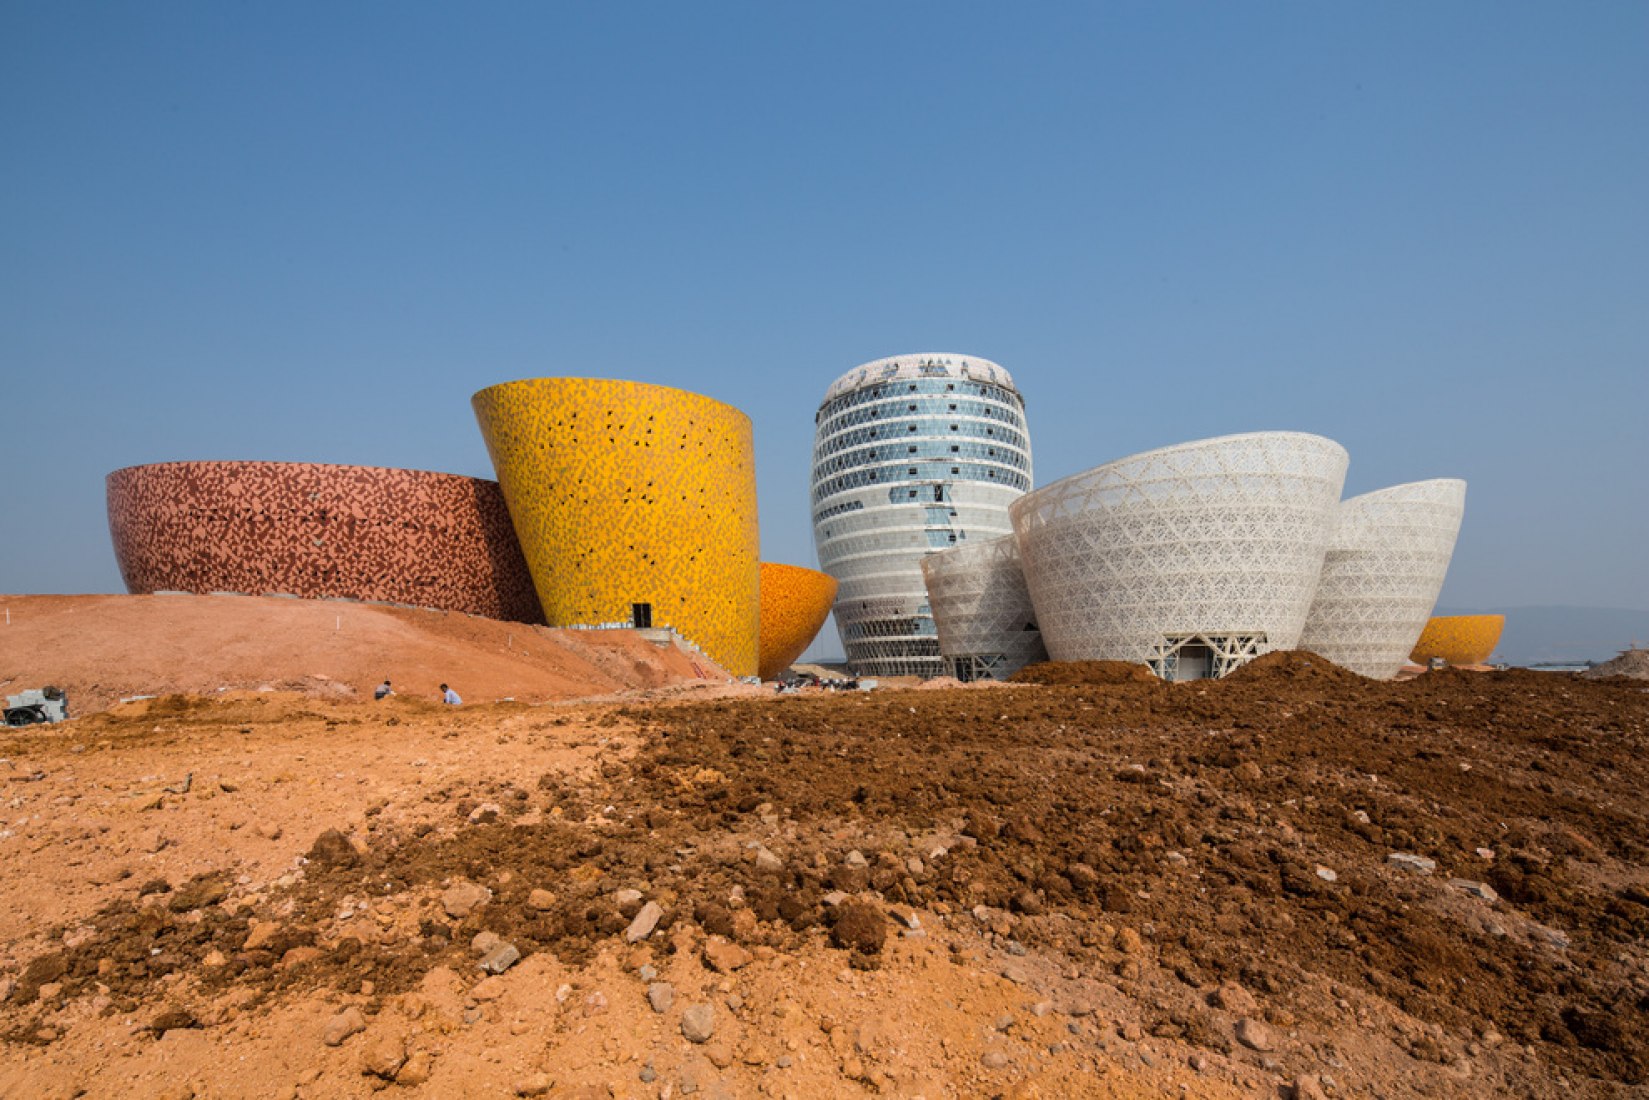 Ceramic Wonderland by Archea Associati | The Strength of Architecture ...